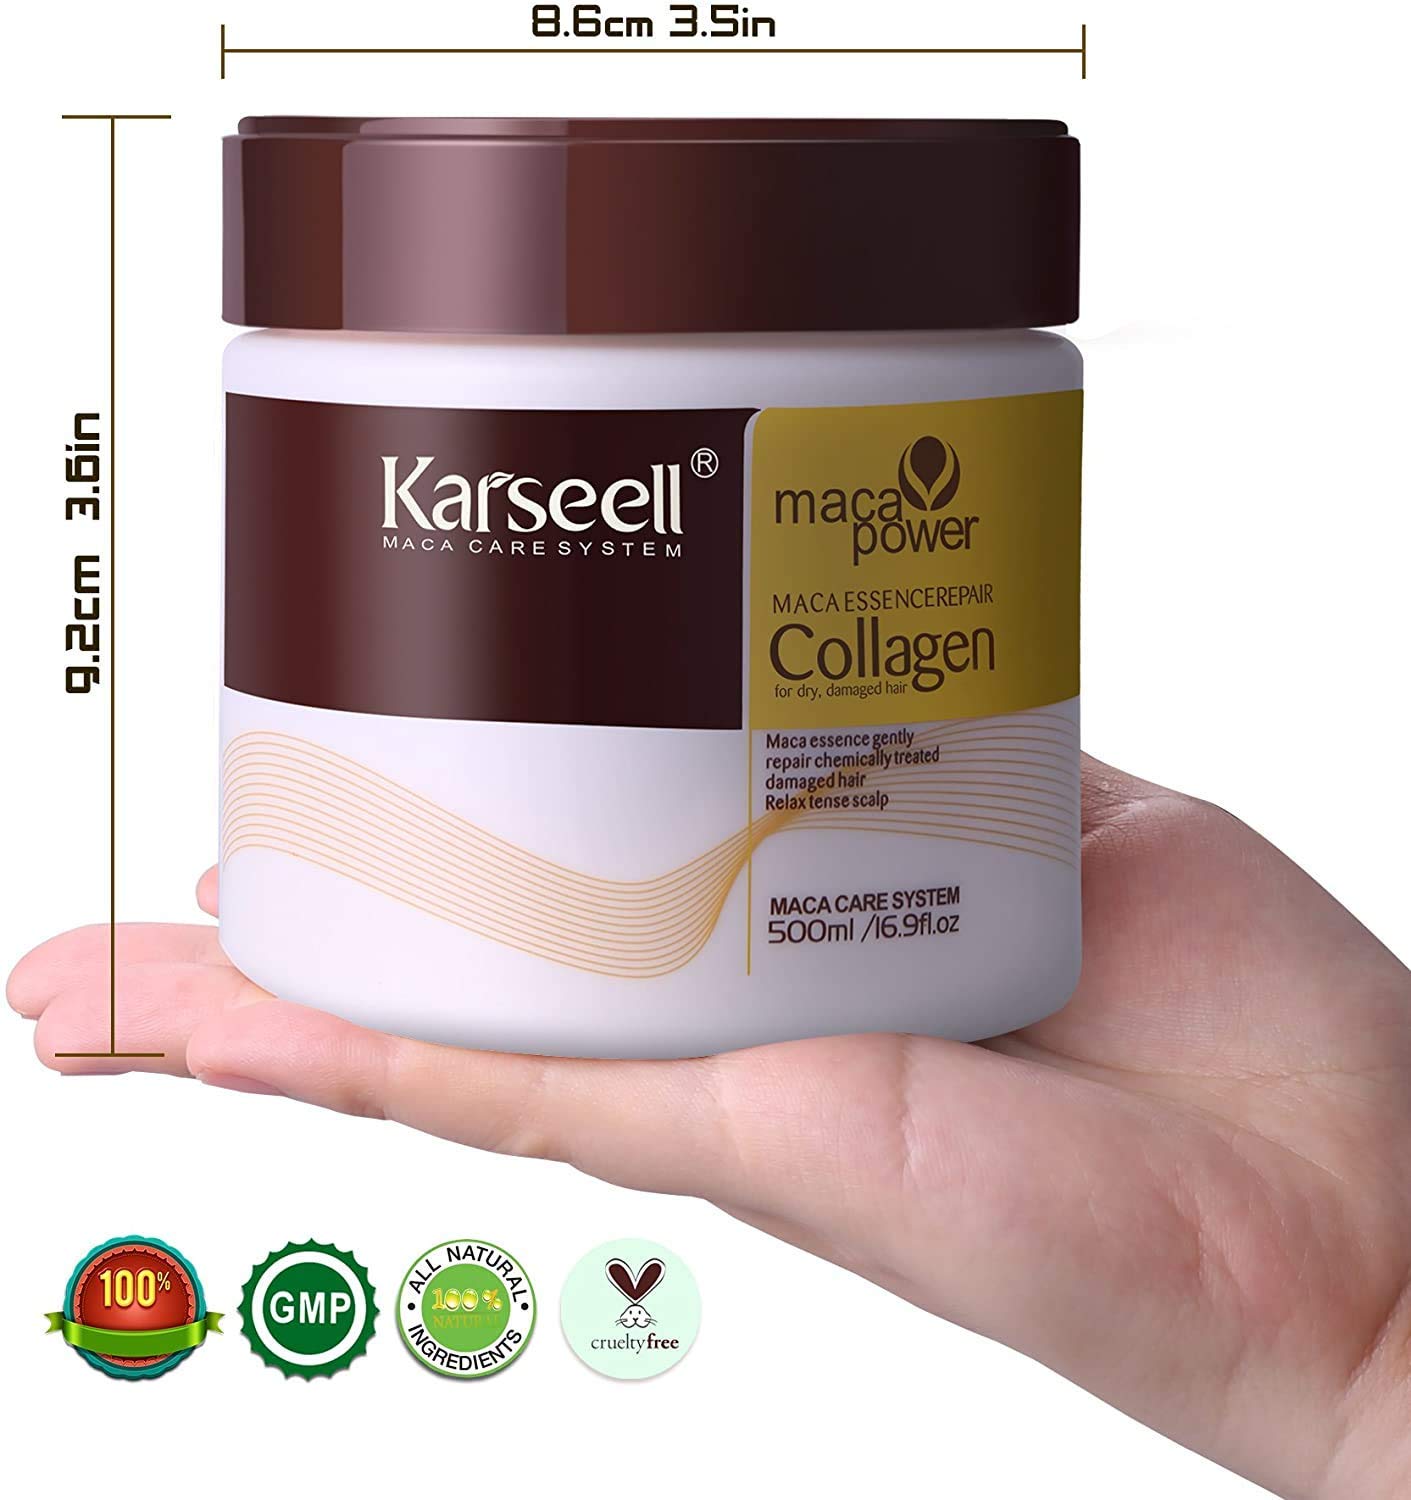 Karseell Collagen Maca Hair Treatment Deep Repair Conditioning Hair Mask Argan Oil Coconut Oil Essence for Dry Damaged Hair All Hair Types 16.90 oz 500ml